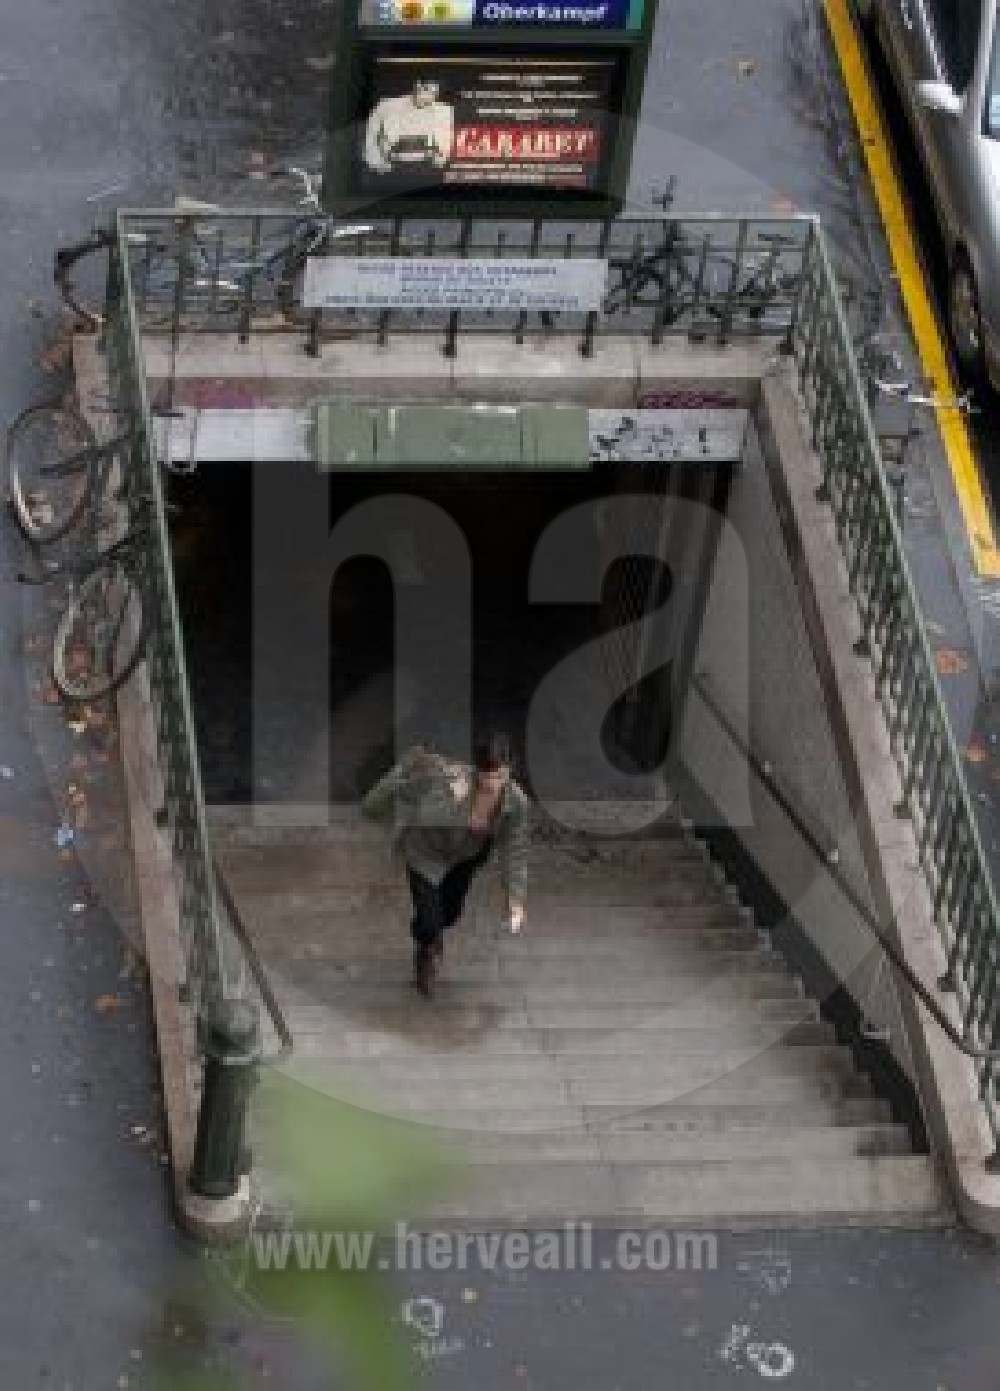 metro oberkampf